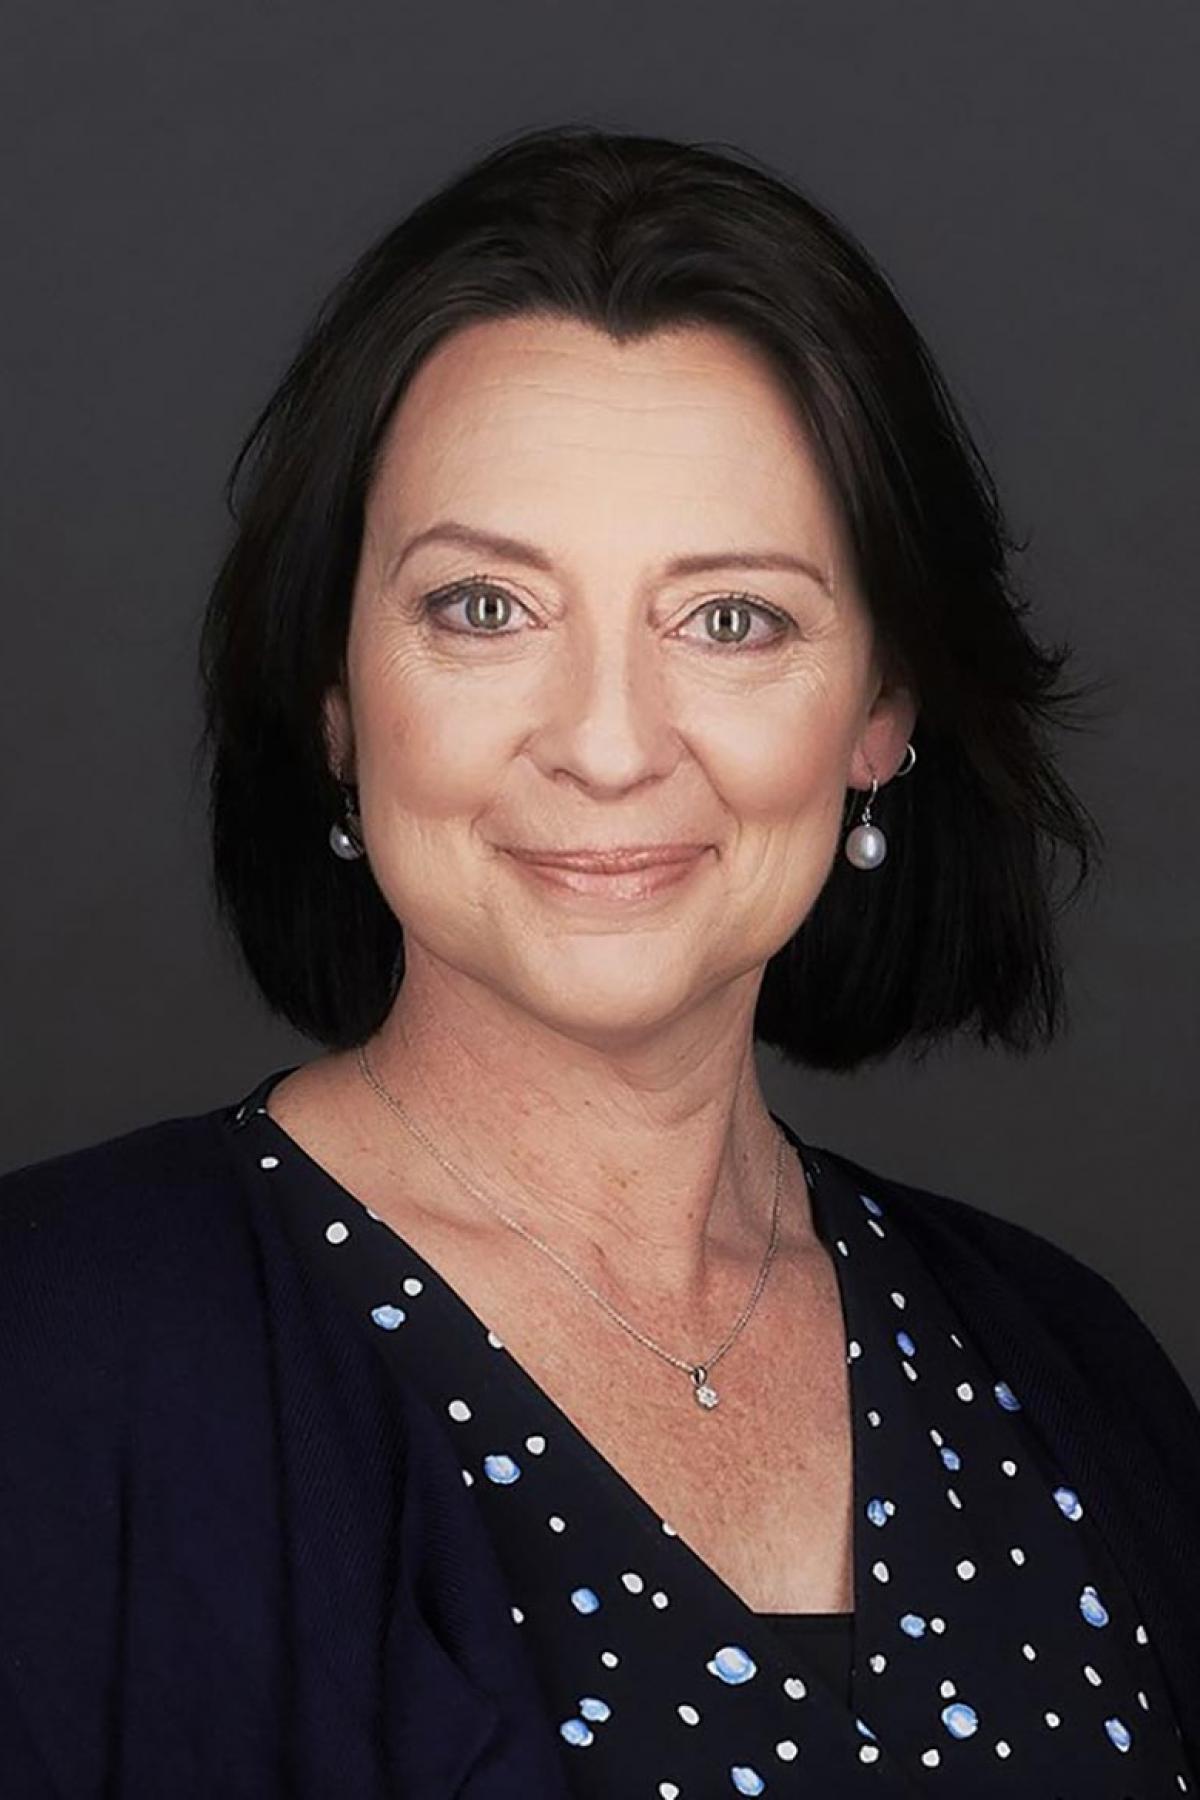 Professor Laura Parry